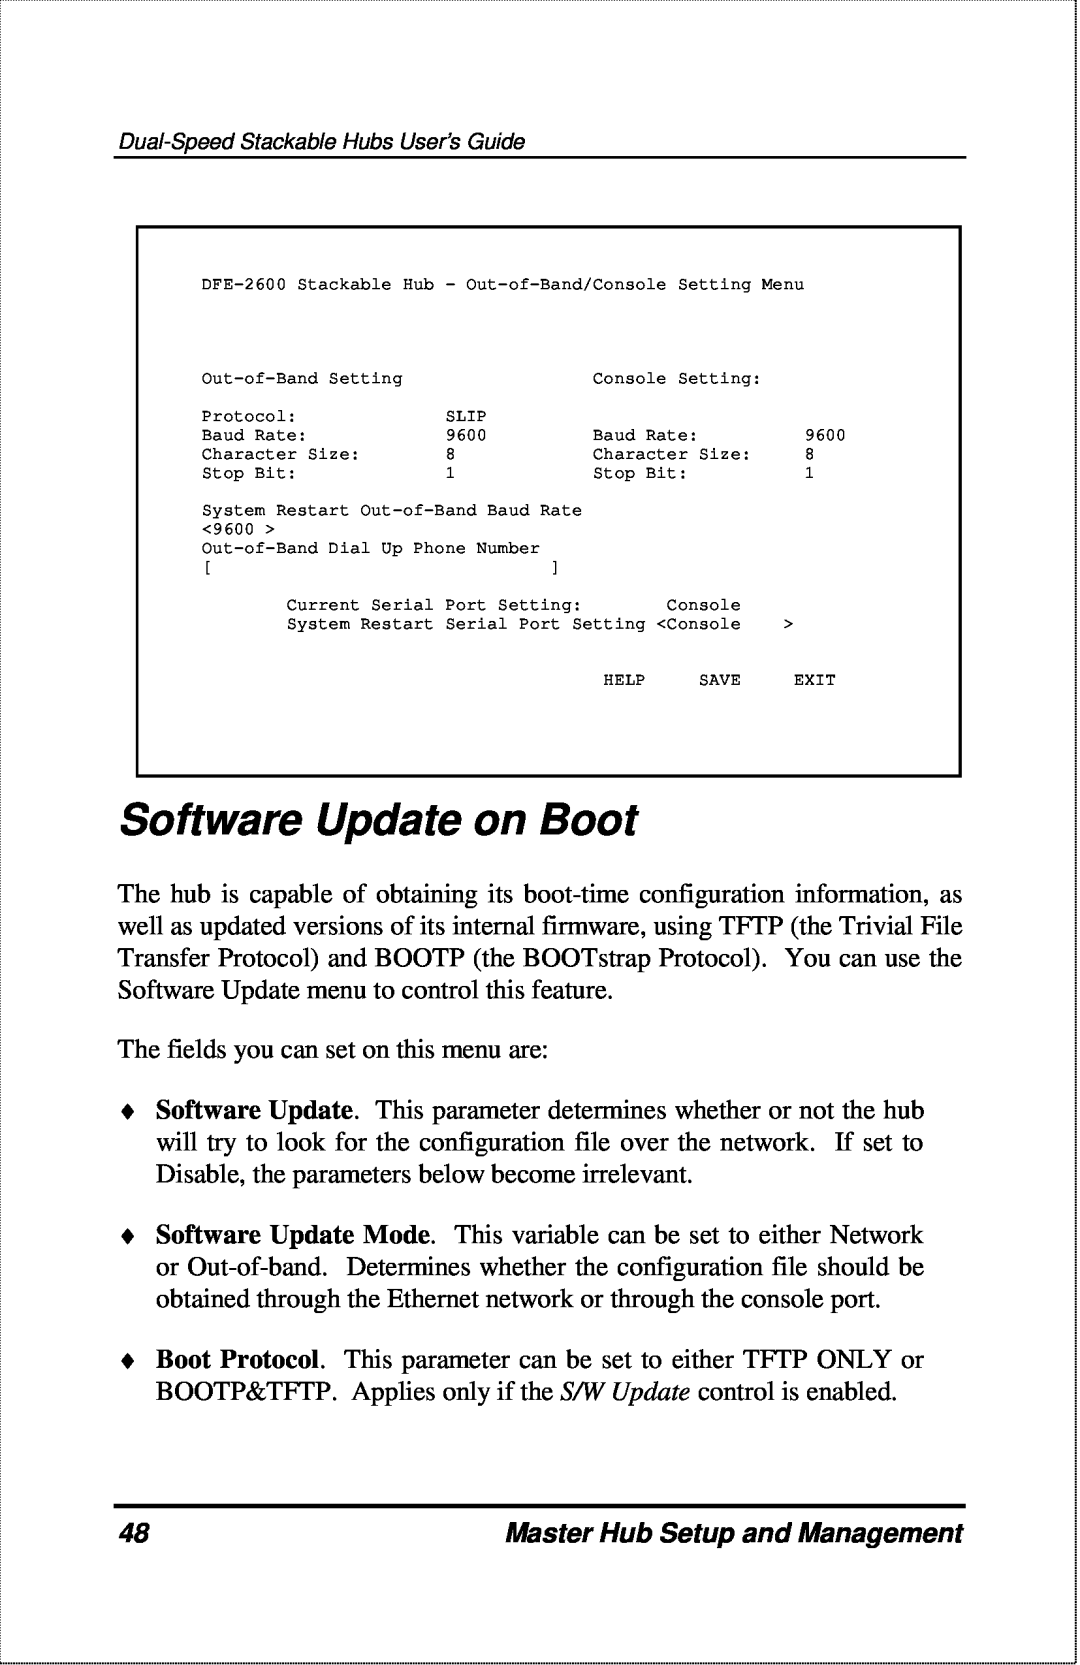 D-Link DFE-2600 manual Software Update on Boot, Master Hub Setup and Management 